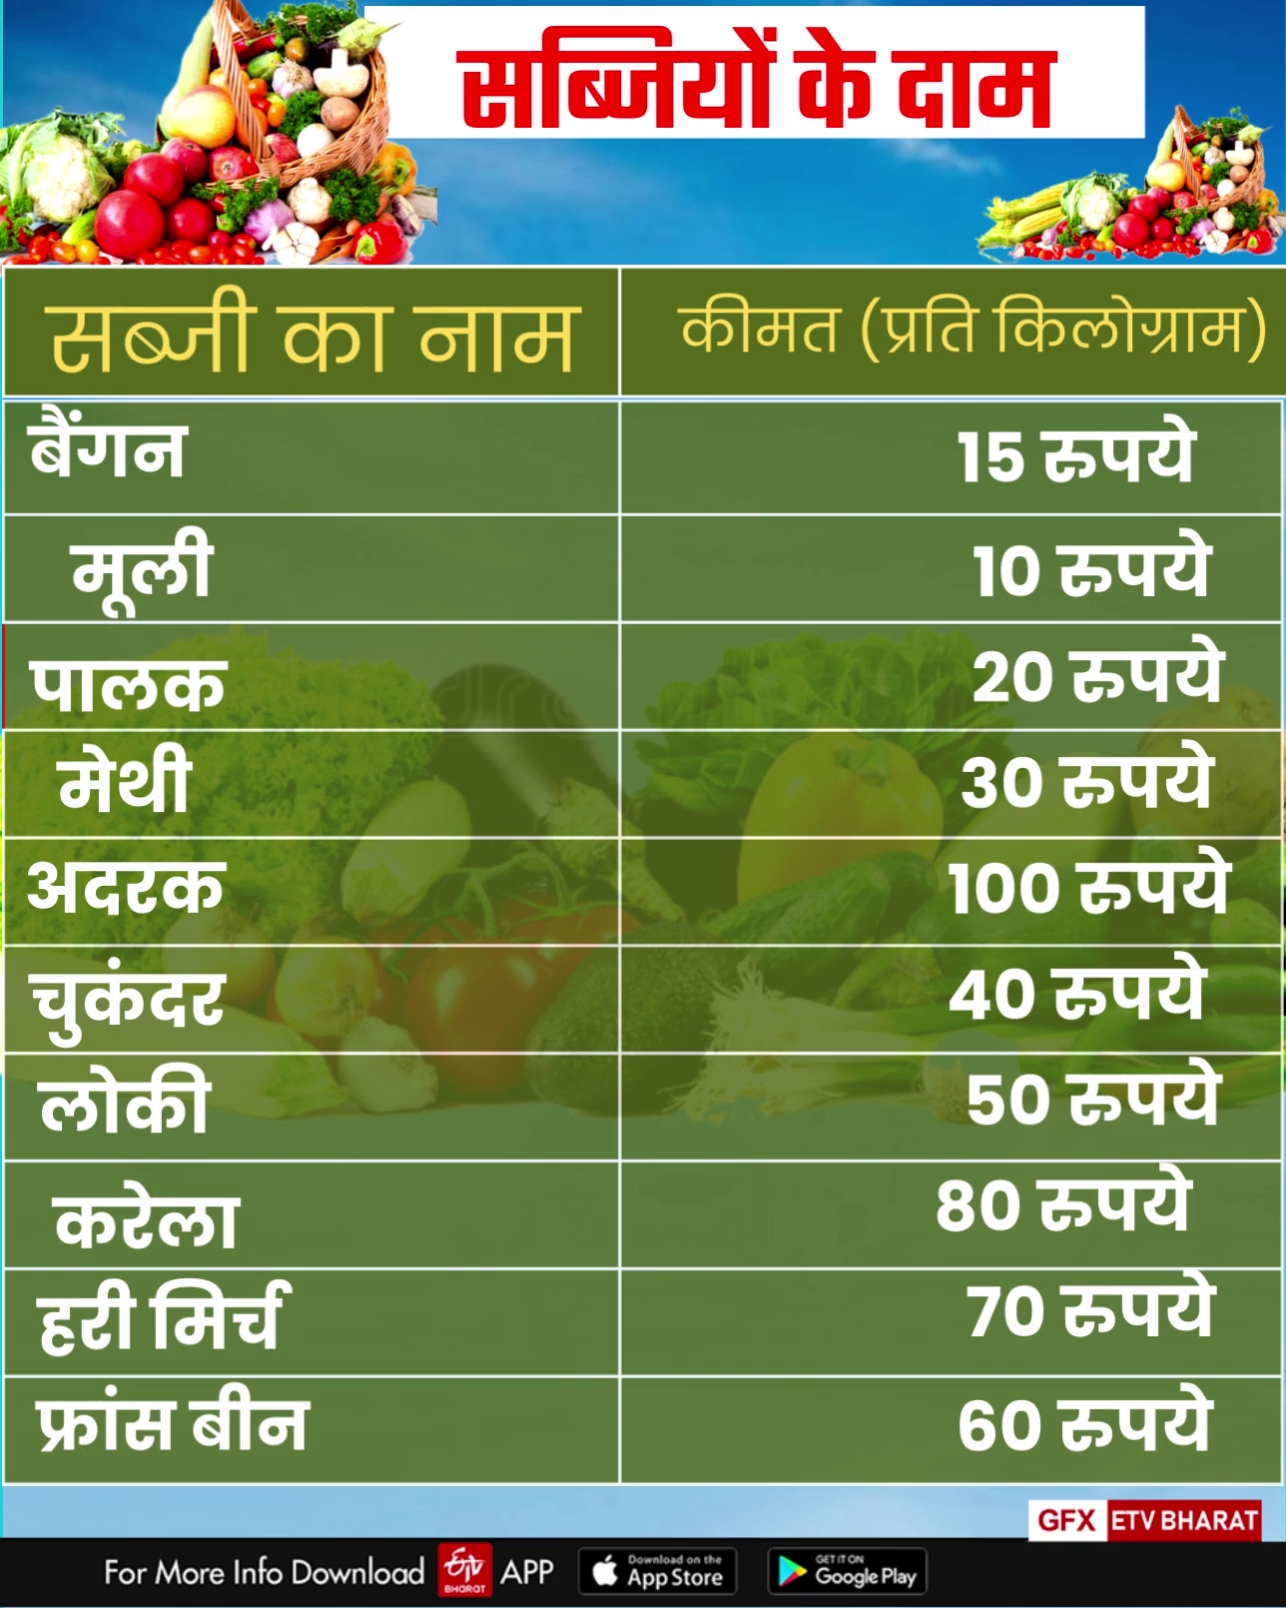 Vegetables price in karnal